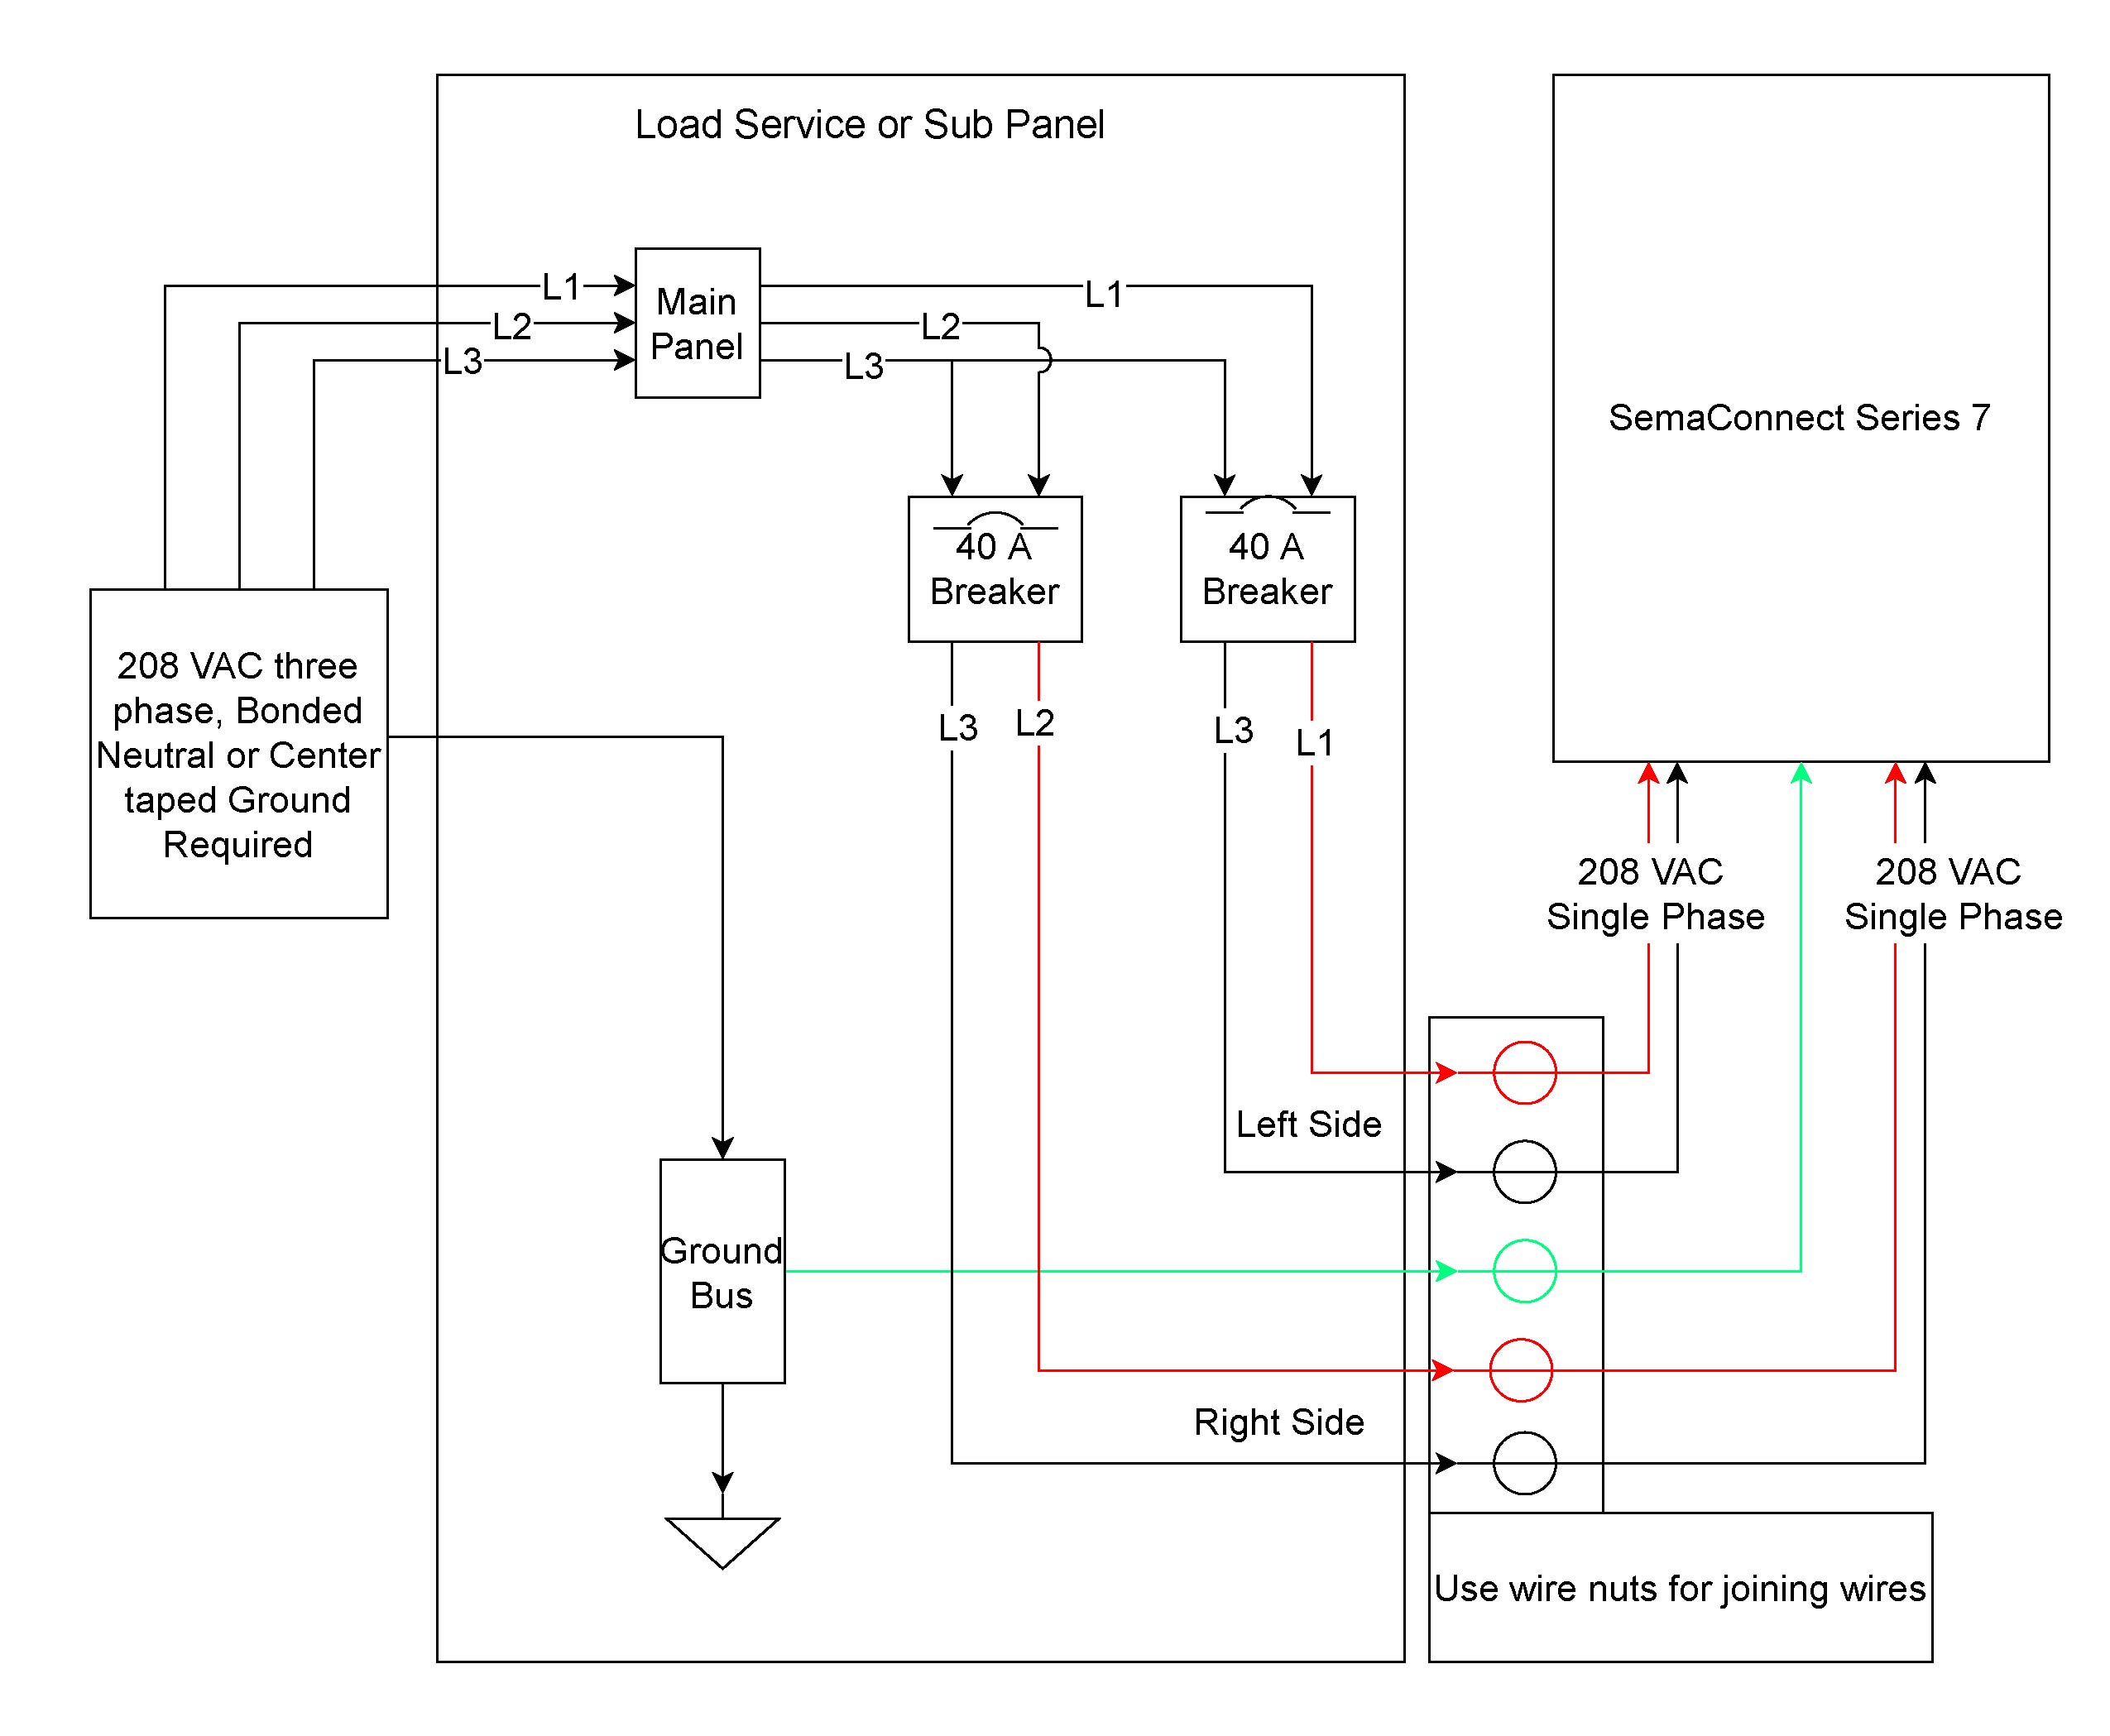 pac tr7 wiring diagram